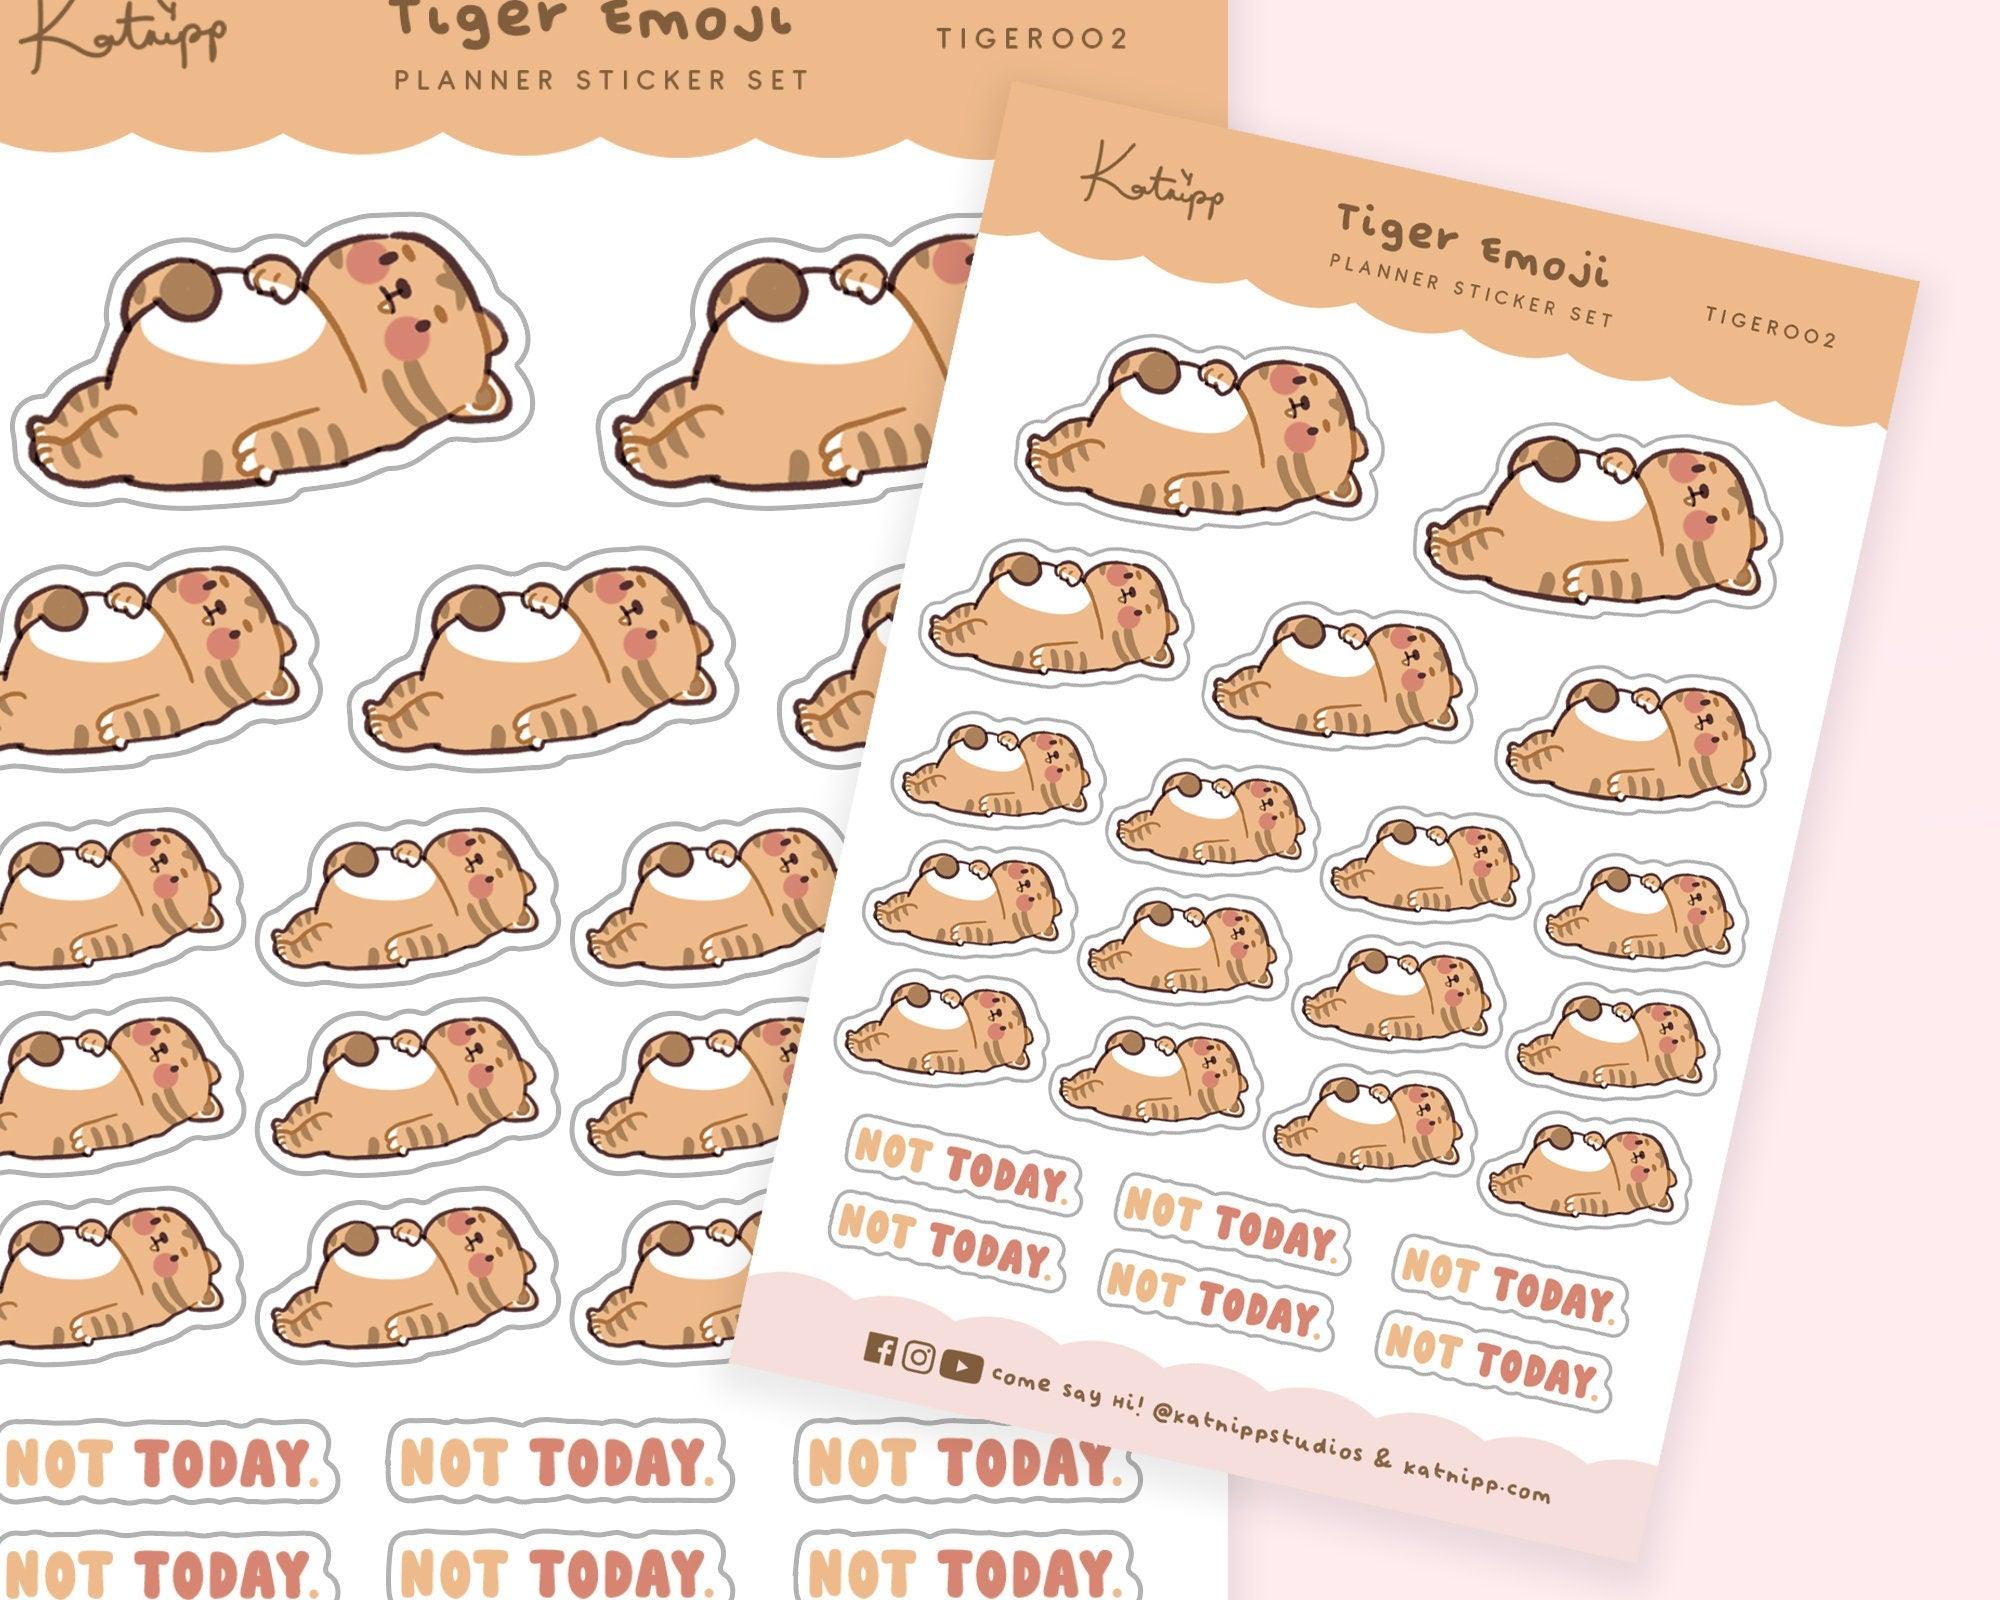 NOT TODAY! Cute Tiger Emoji Planner Stickers ~ TIGER002 - Katnipp Illustrations